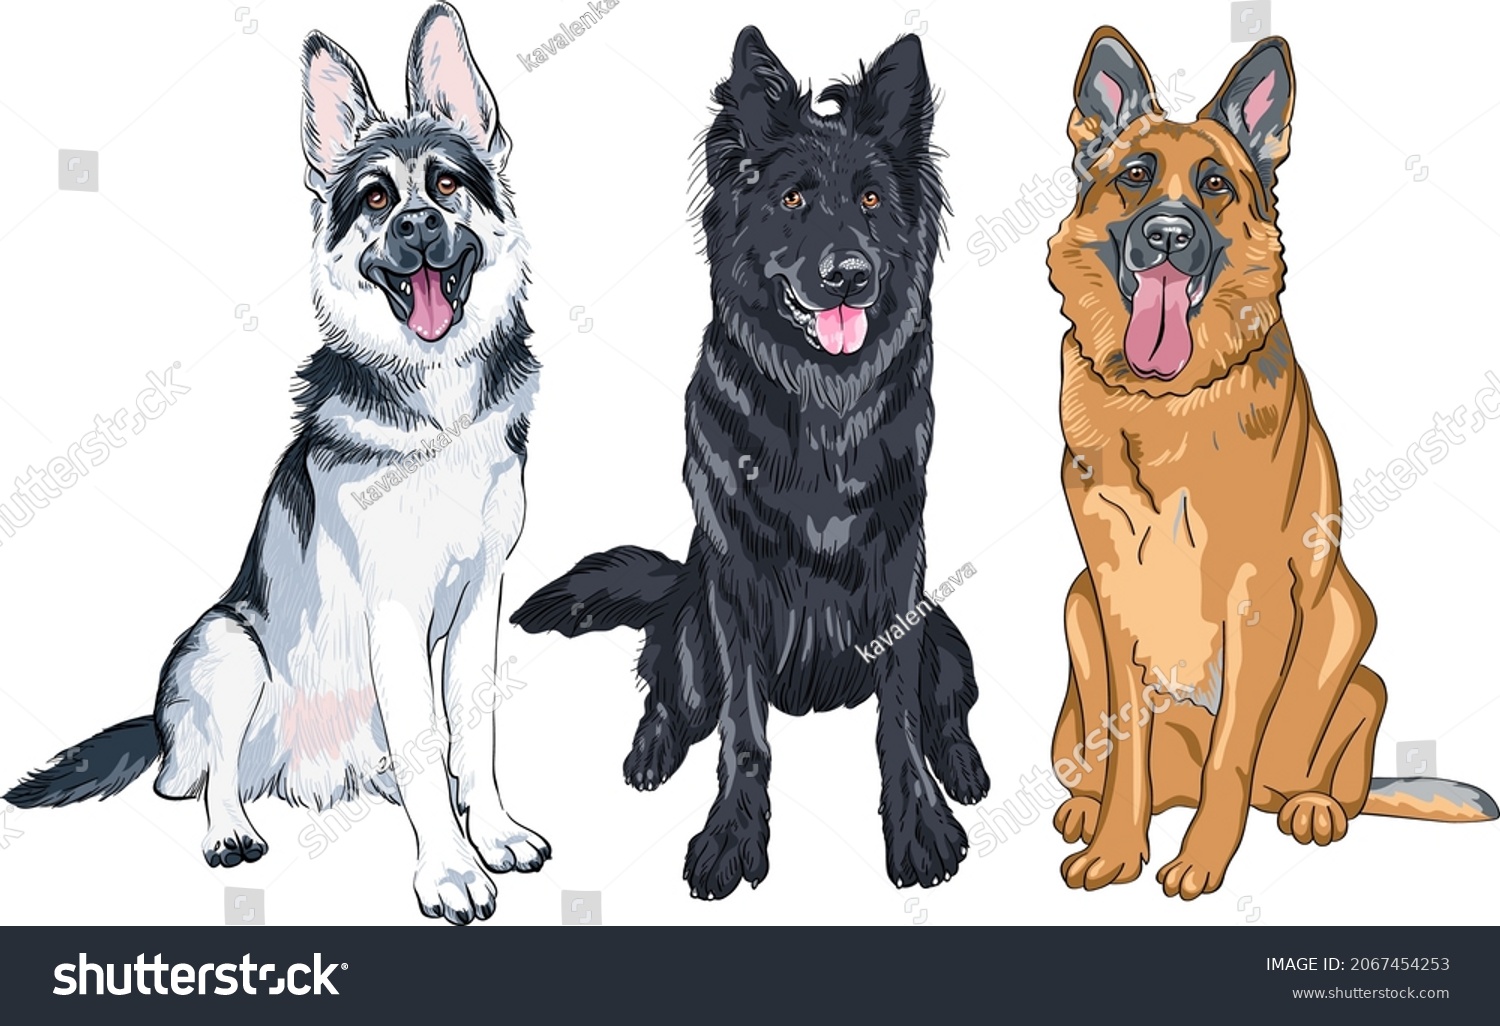 SVG of Vector set of Shepherd dogs, East European Shepherd, black Belgian Shepherd Dog or Groenendael and German shepherd with black mask and sable coat svg